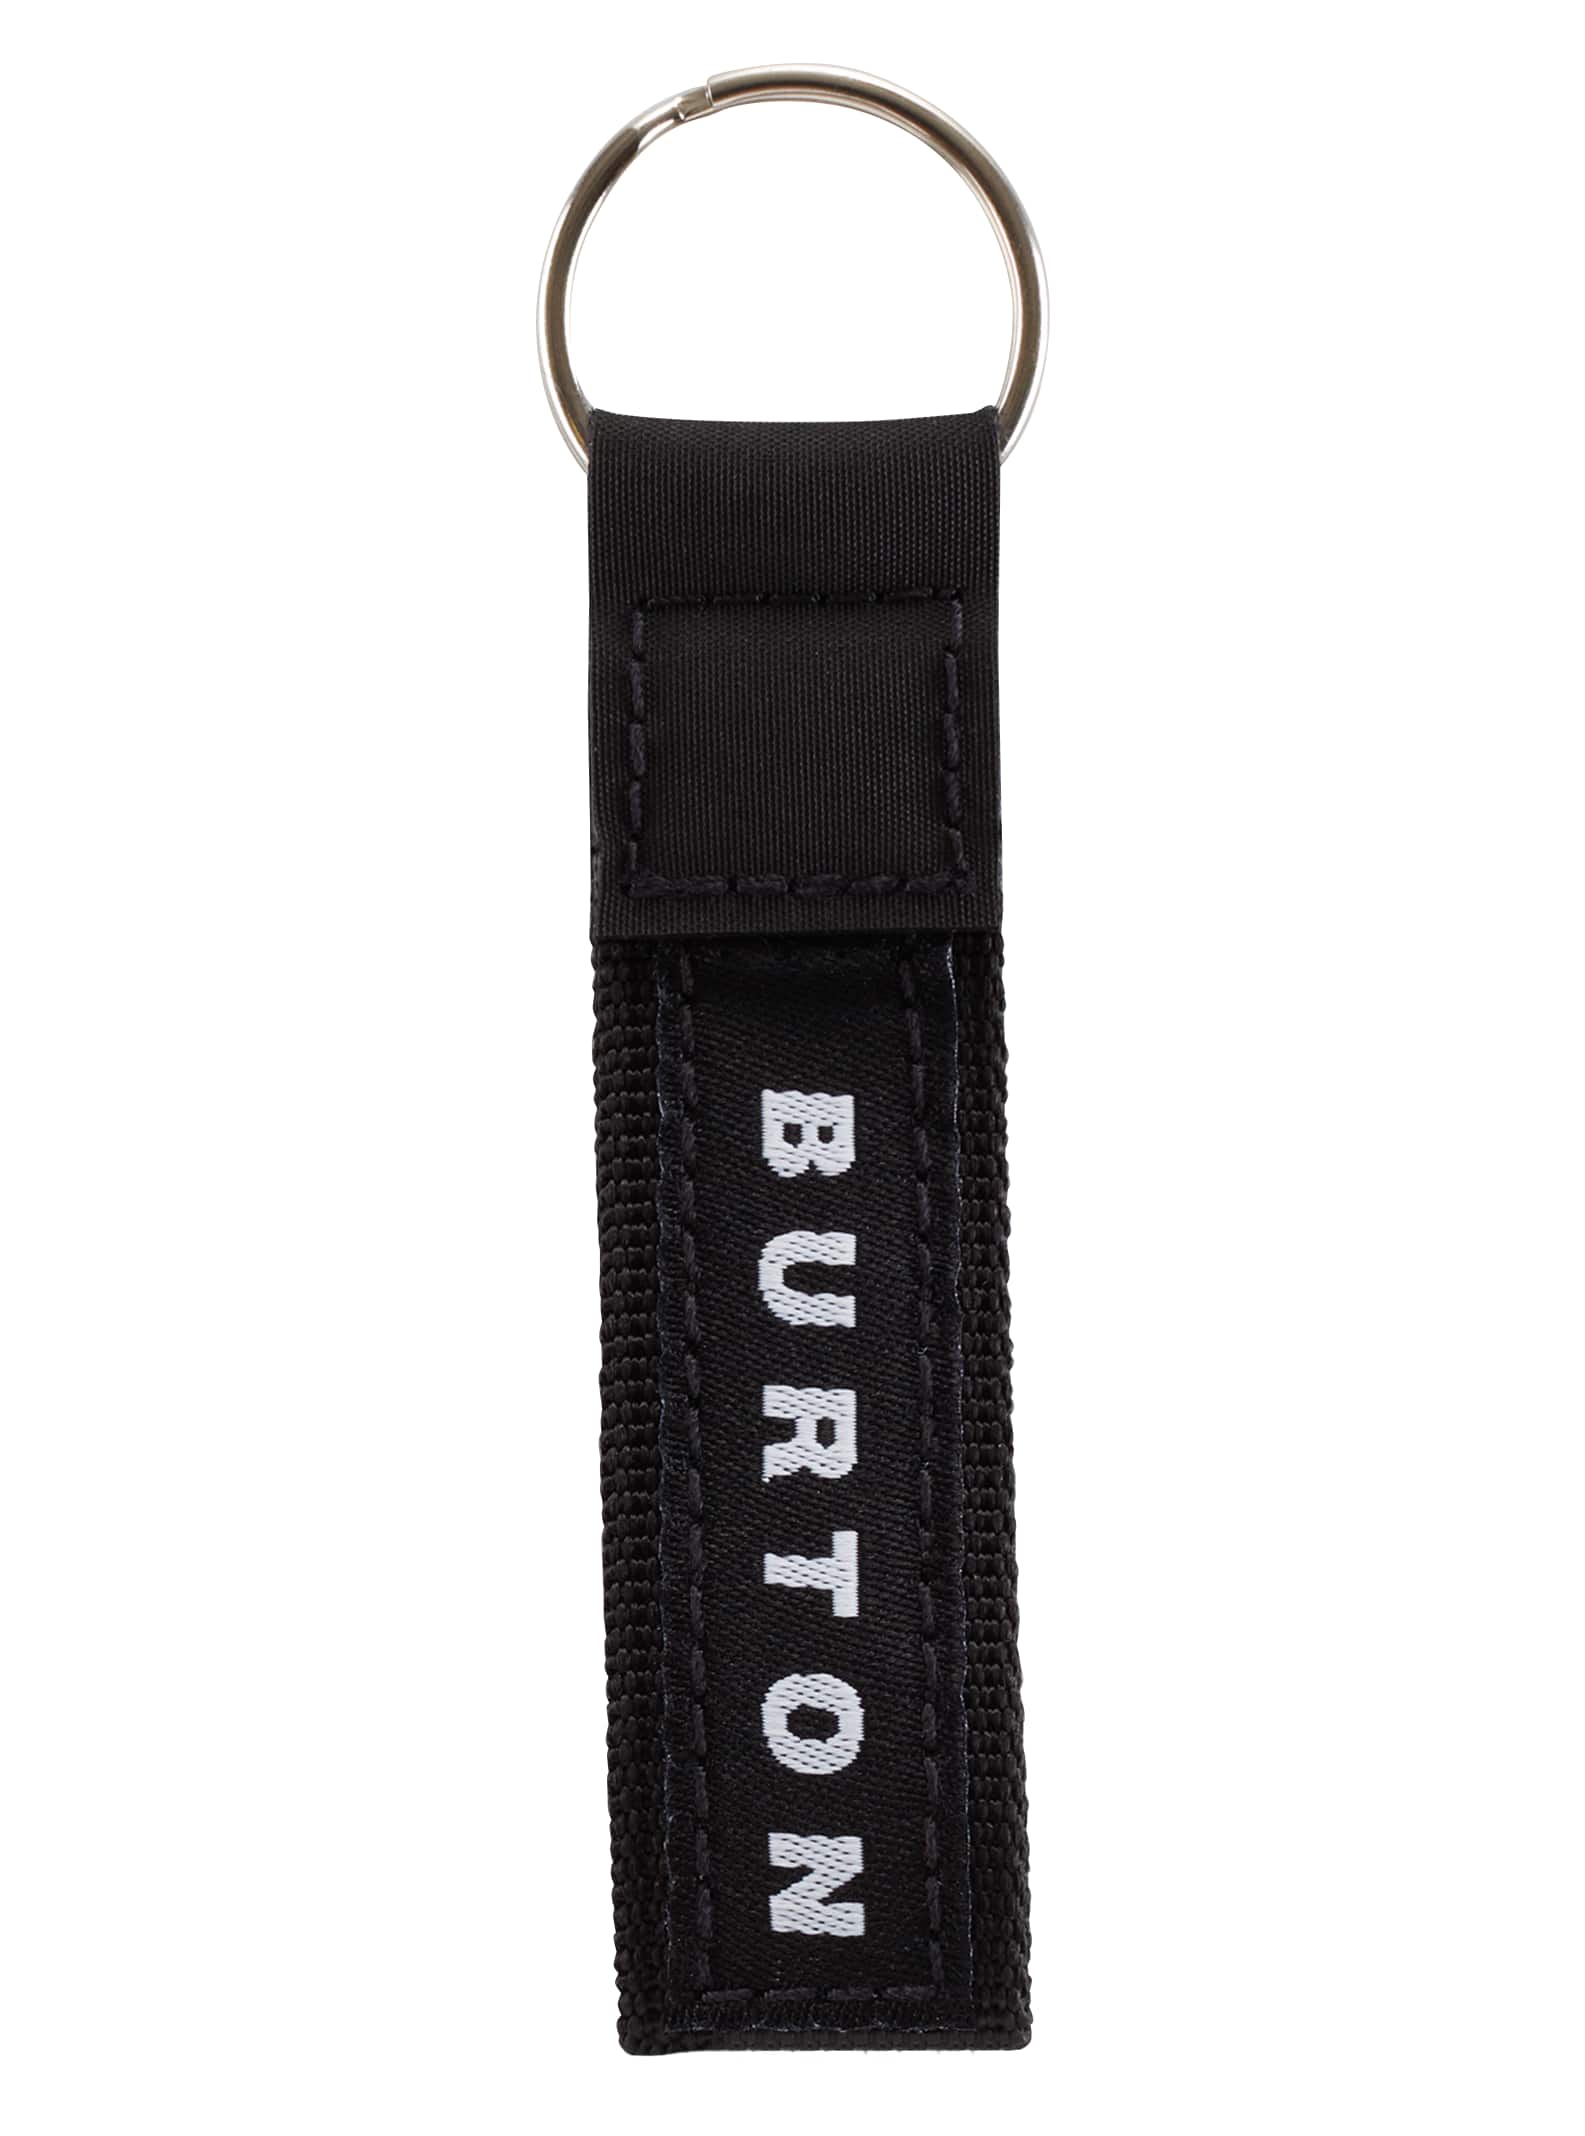 NEW Burton Olive Metal Buckle Black Woven Cord Breakaway MB Trooper Keychain 